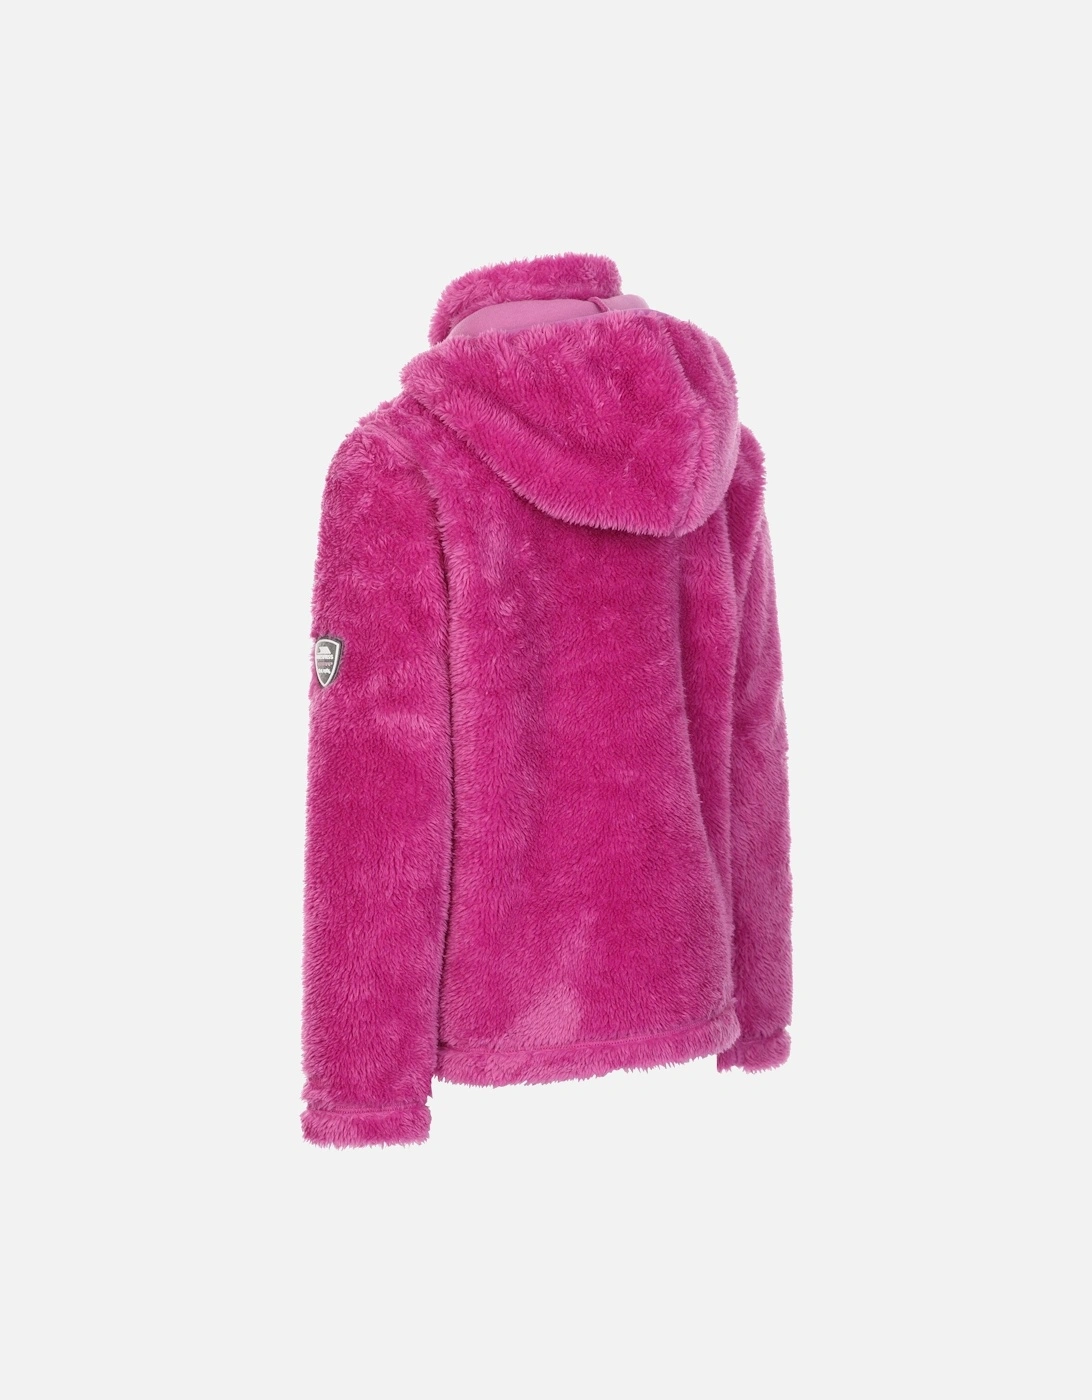 Girls Violetta Fluffy Fleece Jacket